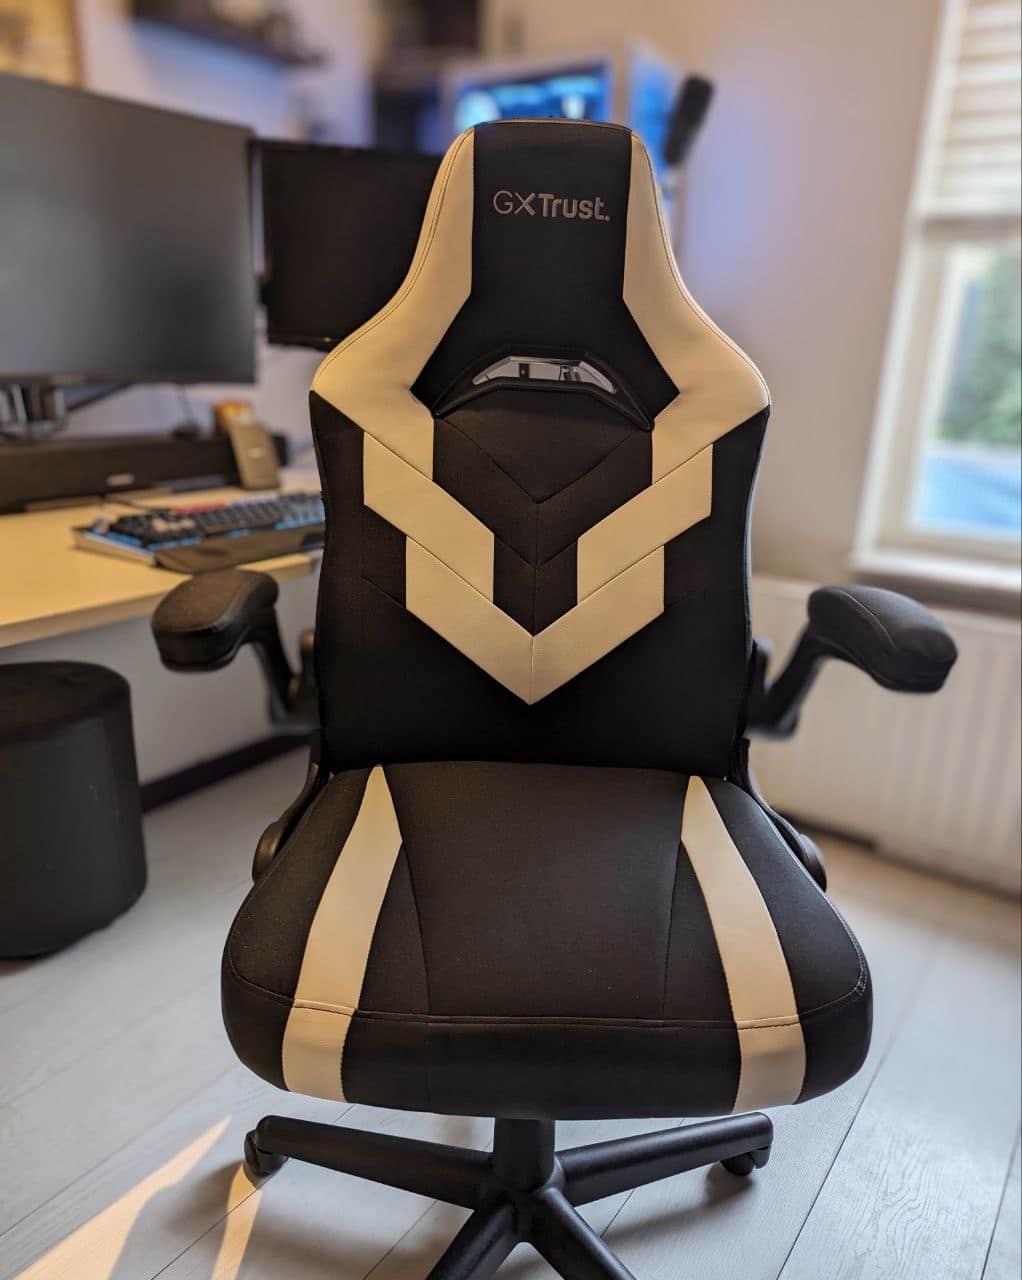 GX trust gaming chair